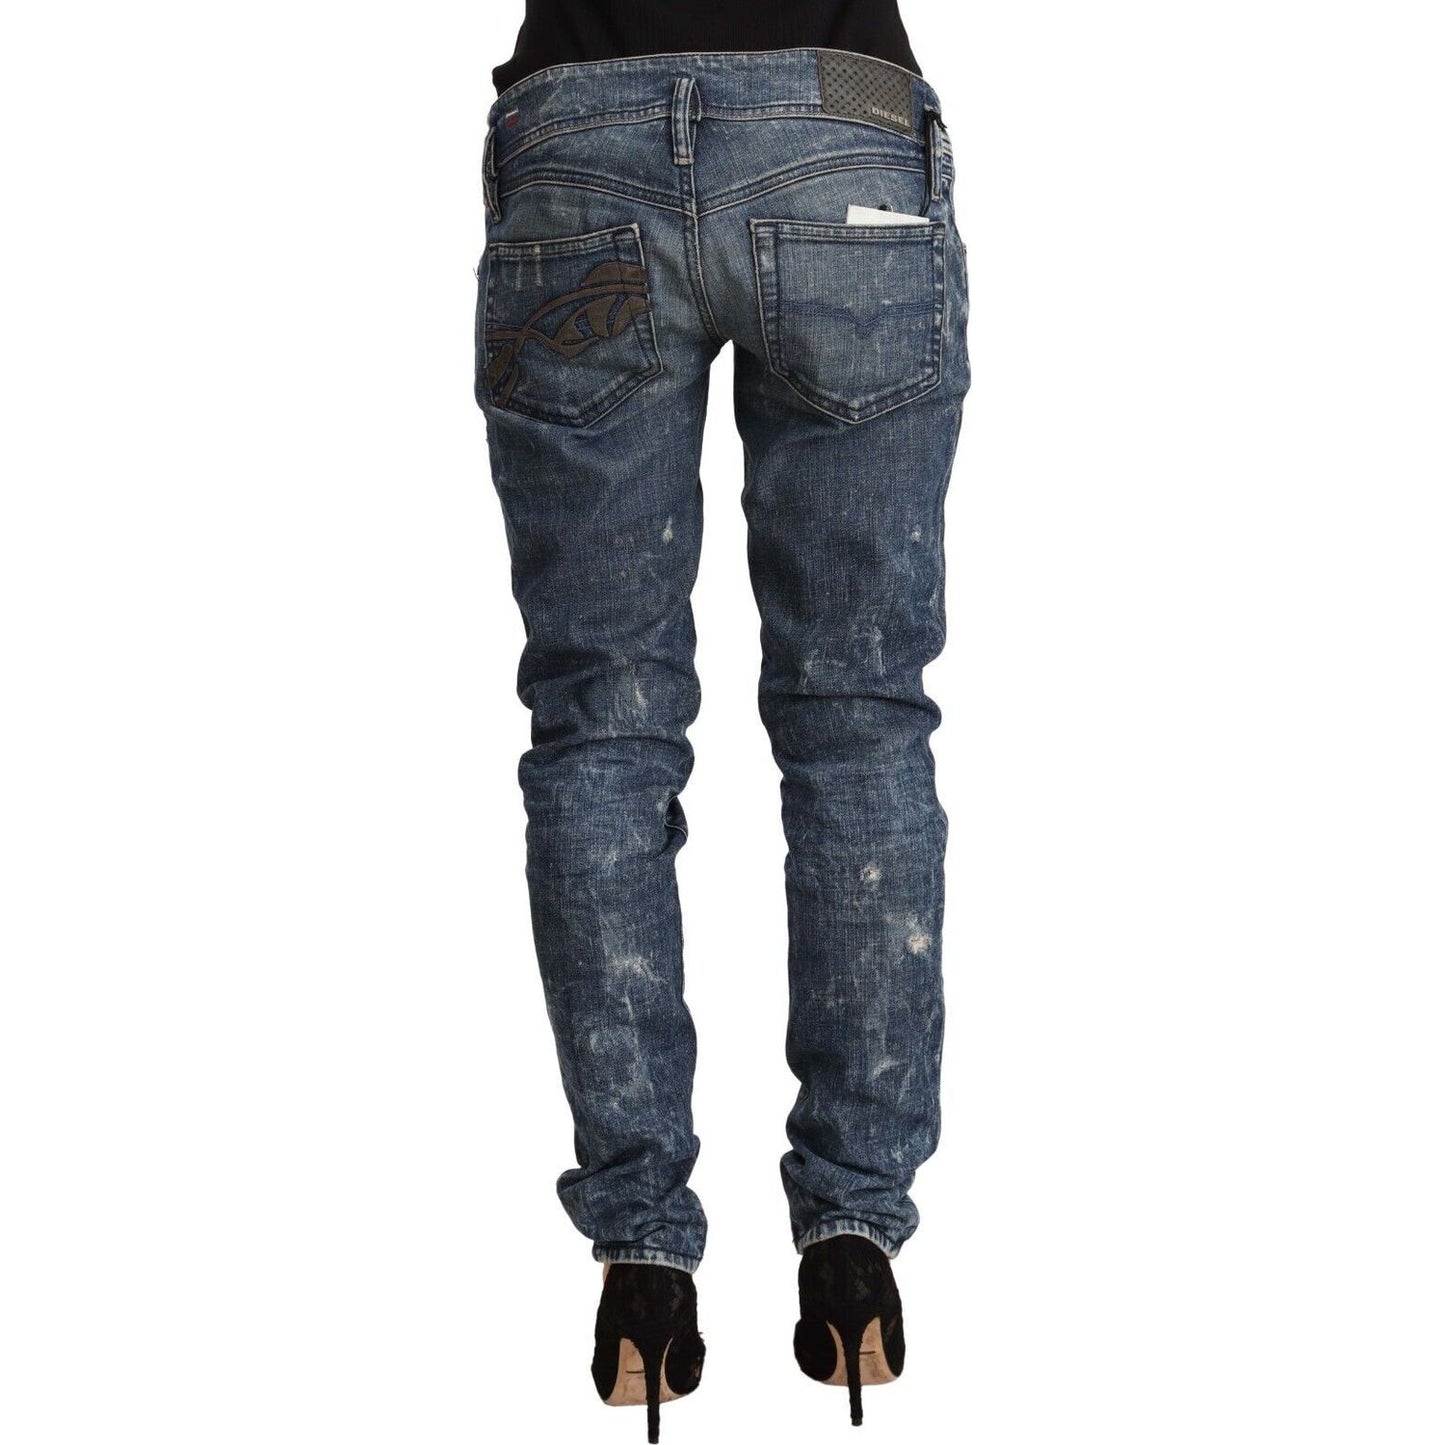 Diesel Chic Low Waist Skinny Denim Delight blue-distressed-low-waist-cotton-denim-skinny-jeans